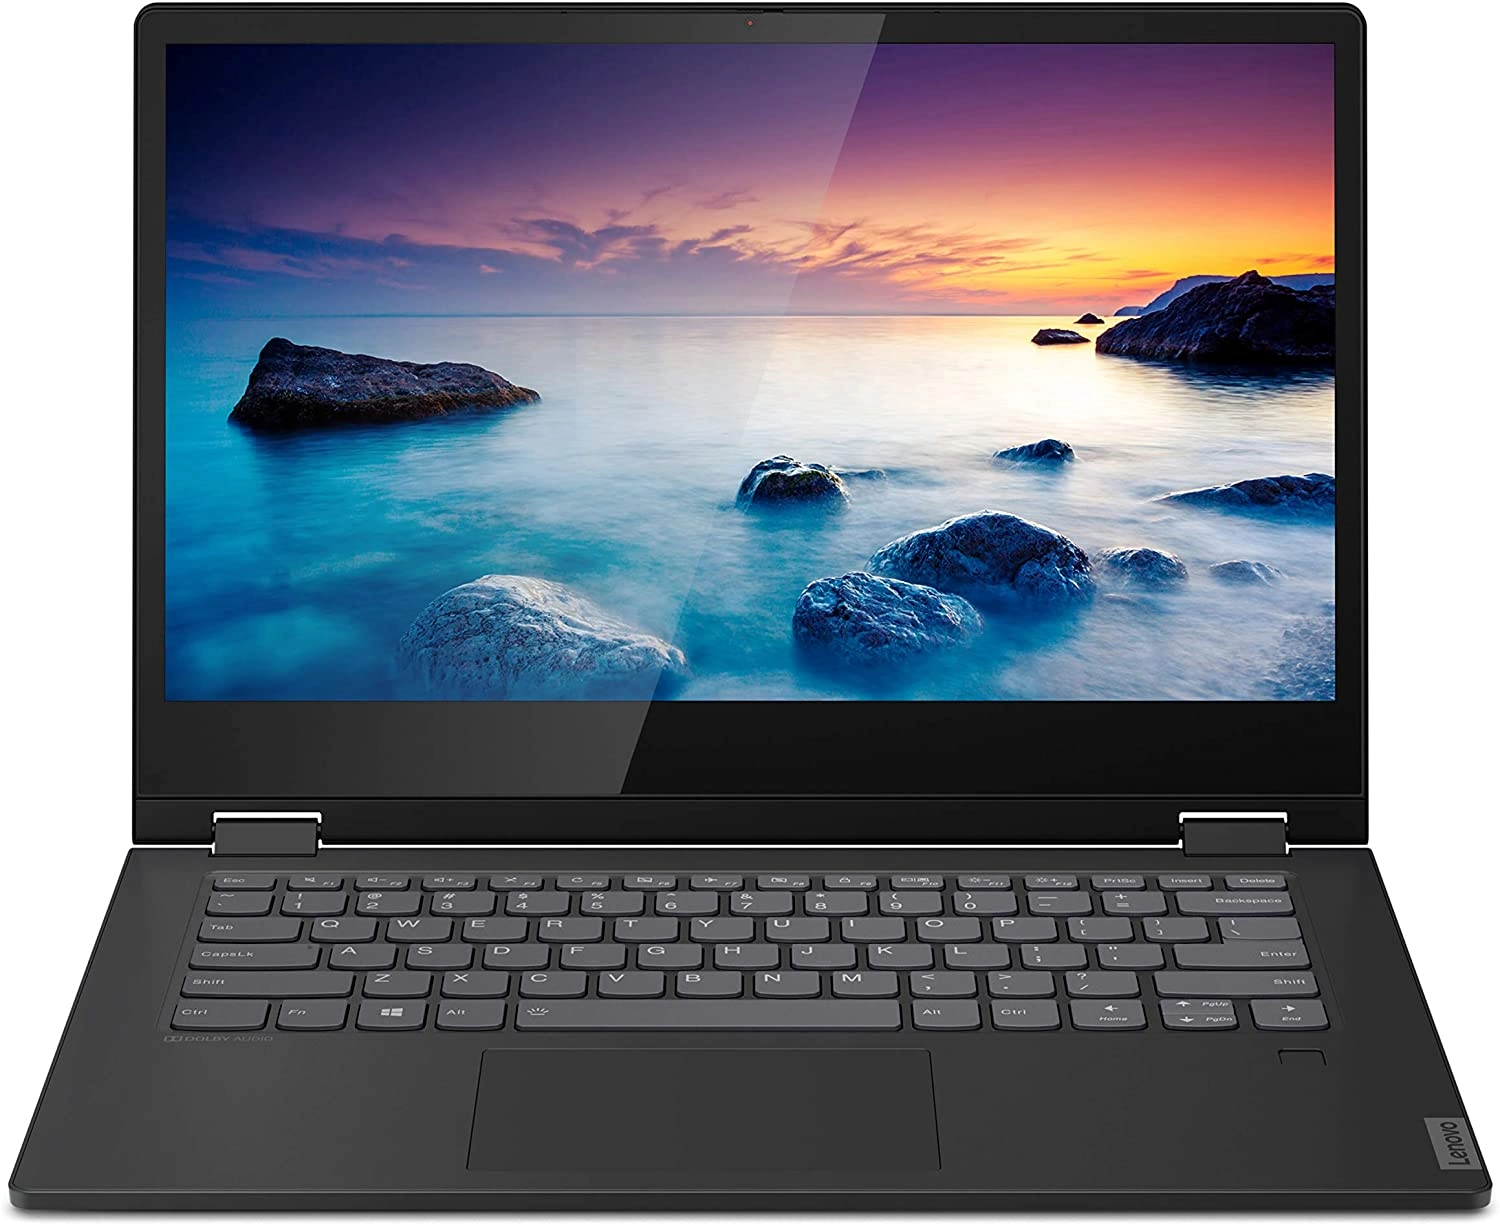 Lenovo Flex 14 laptop image